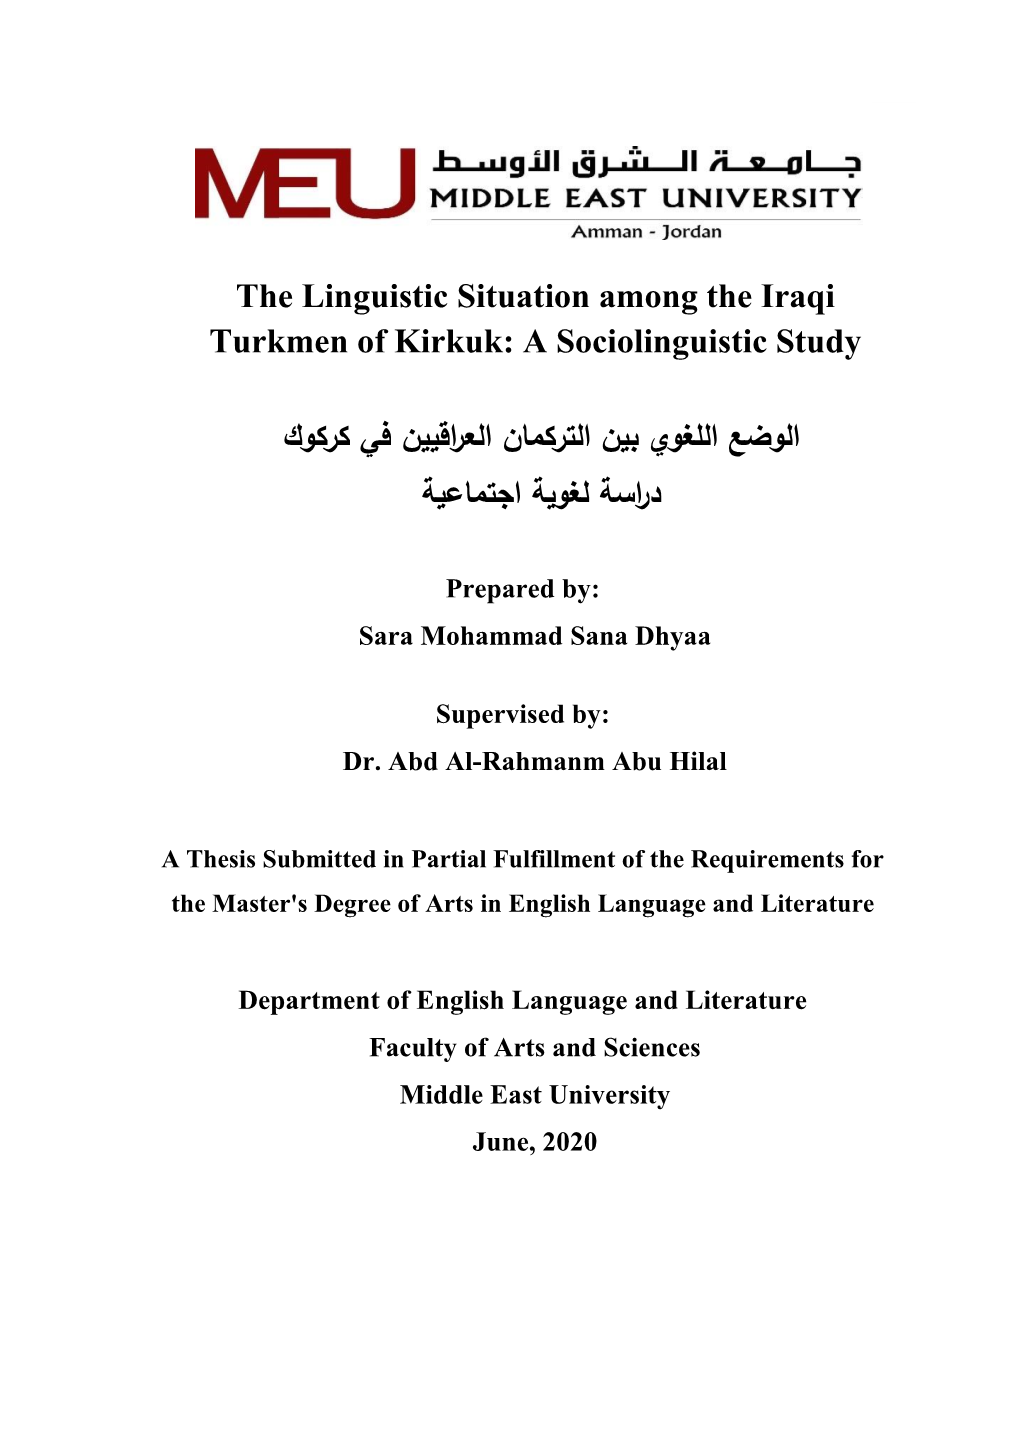 The Linguistic Situation Among the Iraqi Turkmen of Kirkuk: a Sociolinguistic Study